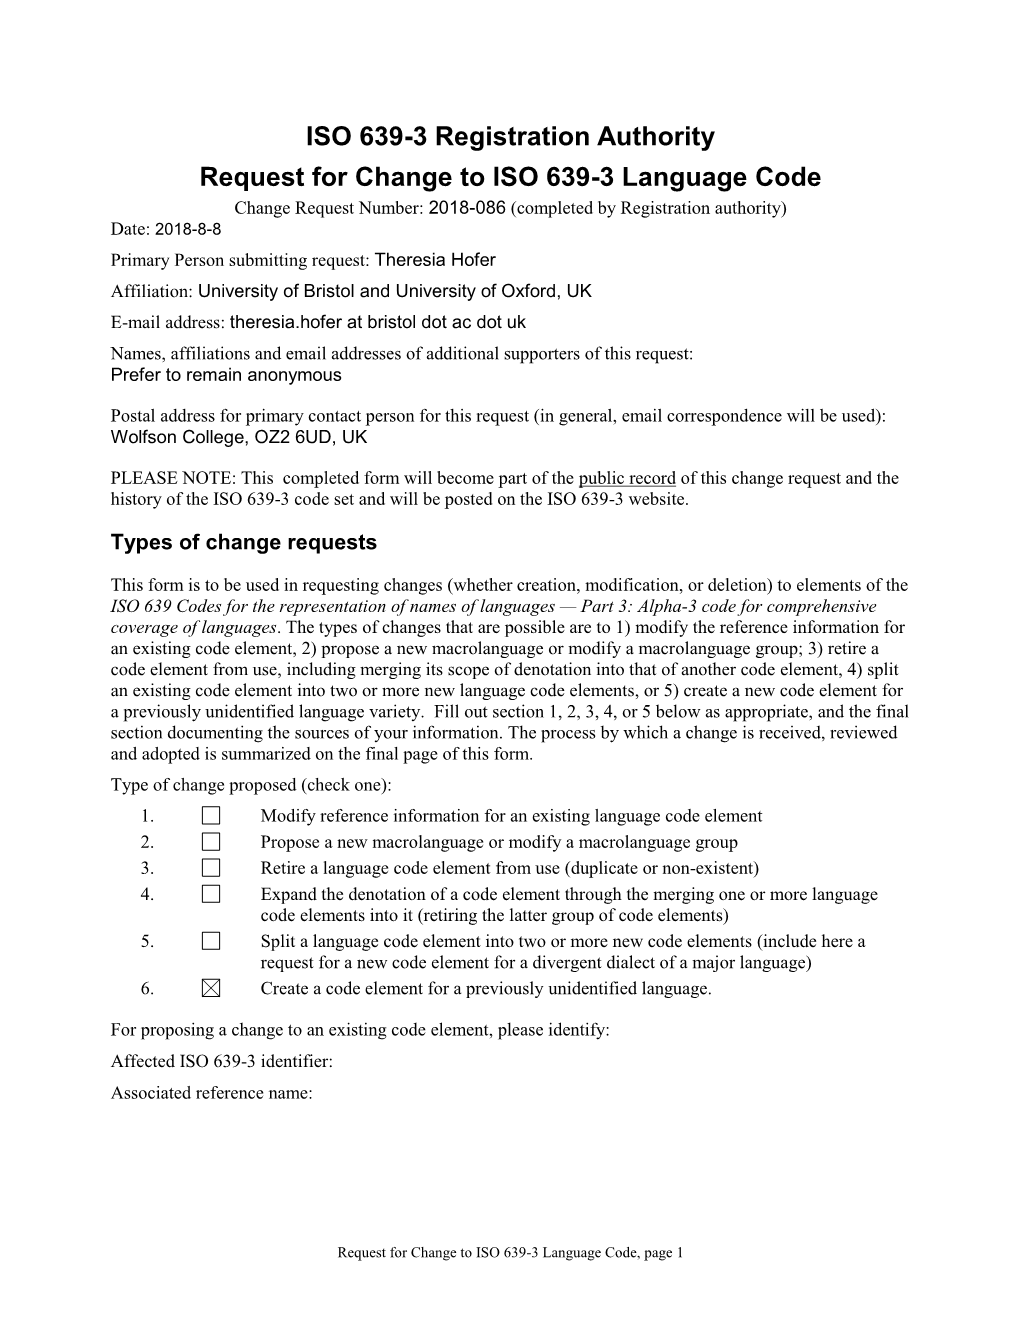 ISO 639-3 Code Split Request Template